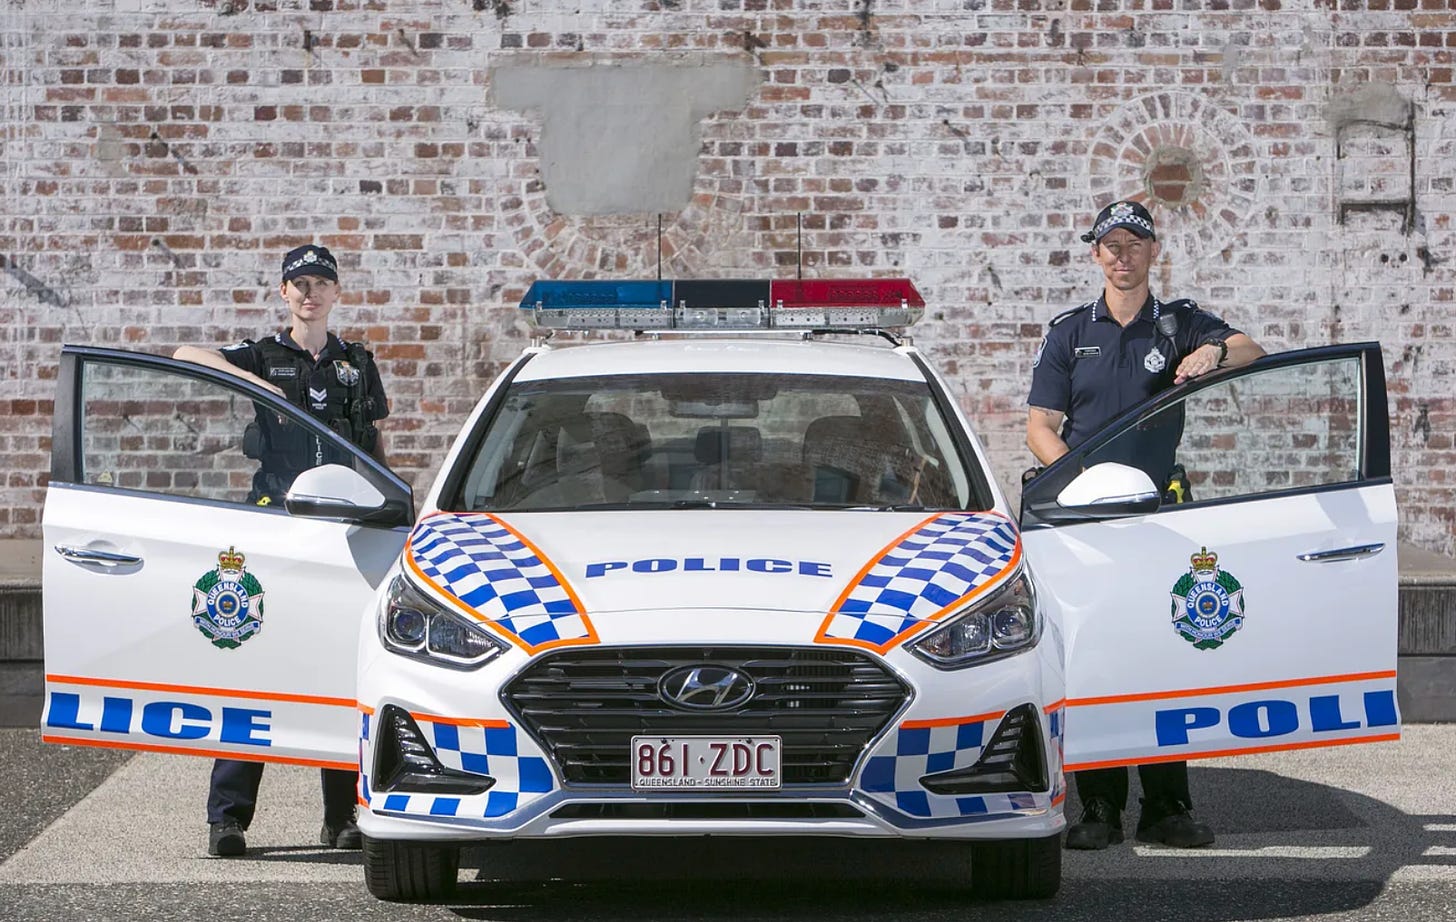 Image courtesy of police.qld.gov.au